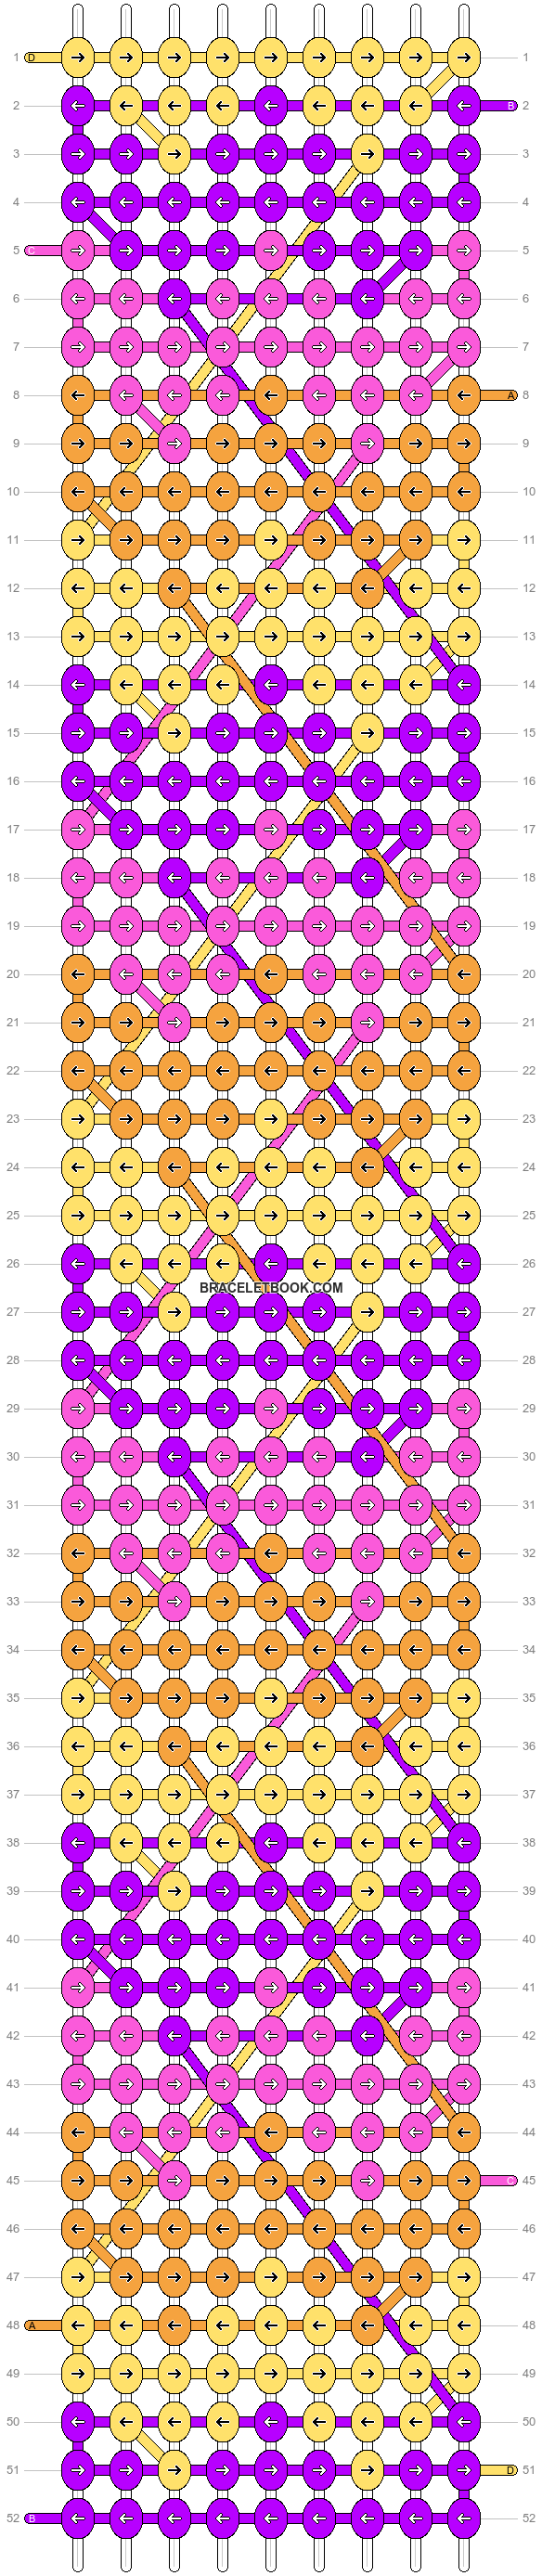 Alpha pattern #24600 pattern